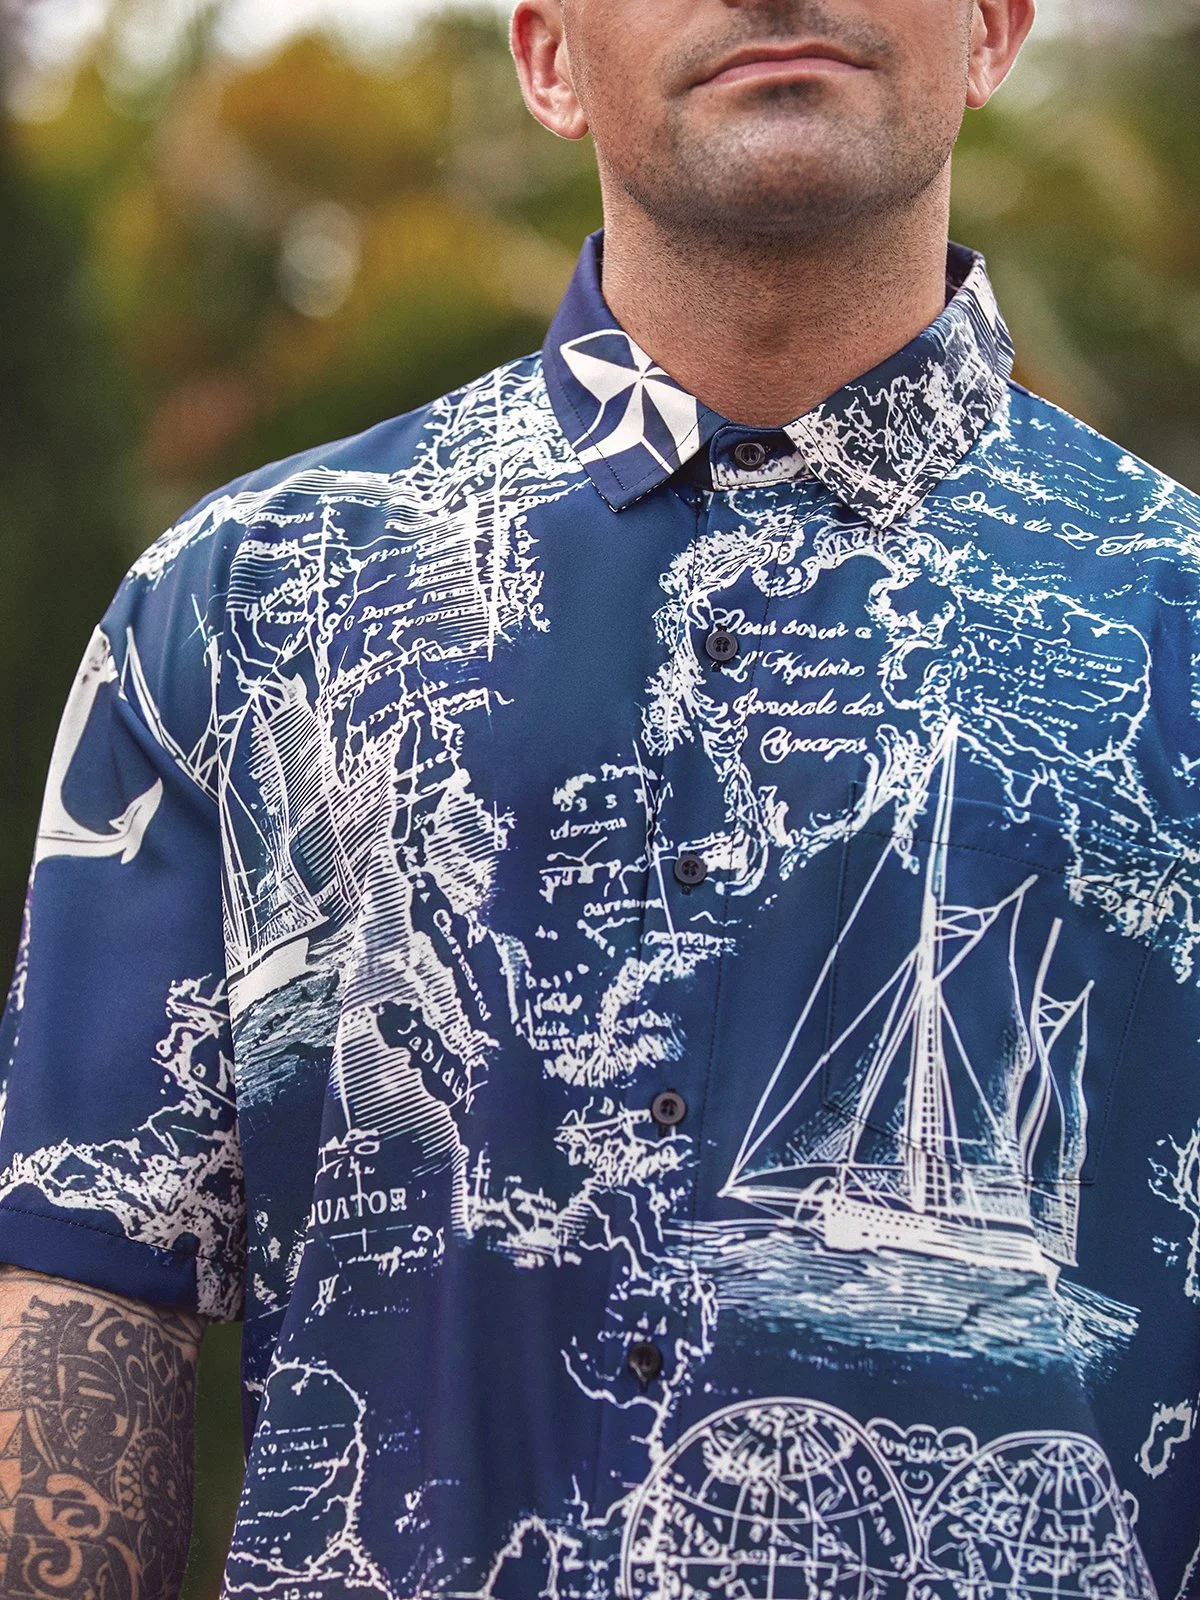 Hardaddy Nautical Map Chest Pocket Short Sleeve Hawaii Shirt